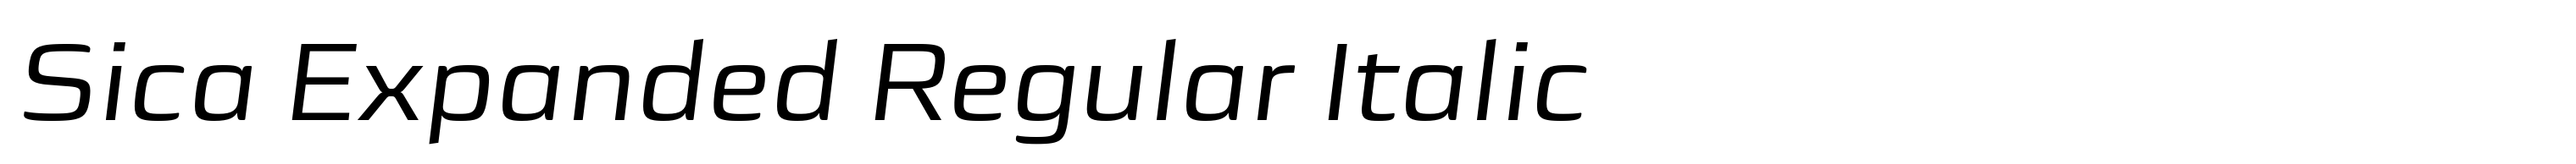 Sica Expanded Regular Italic